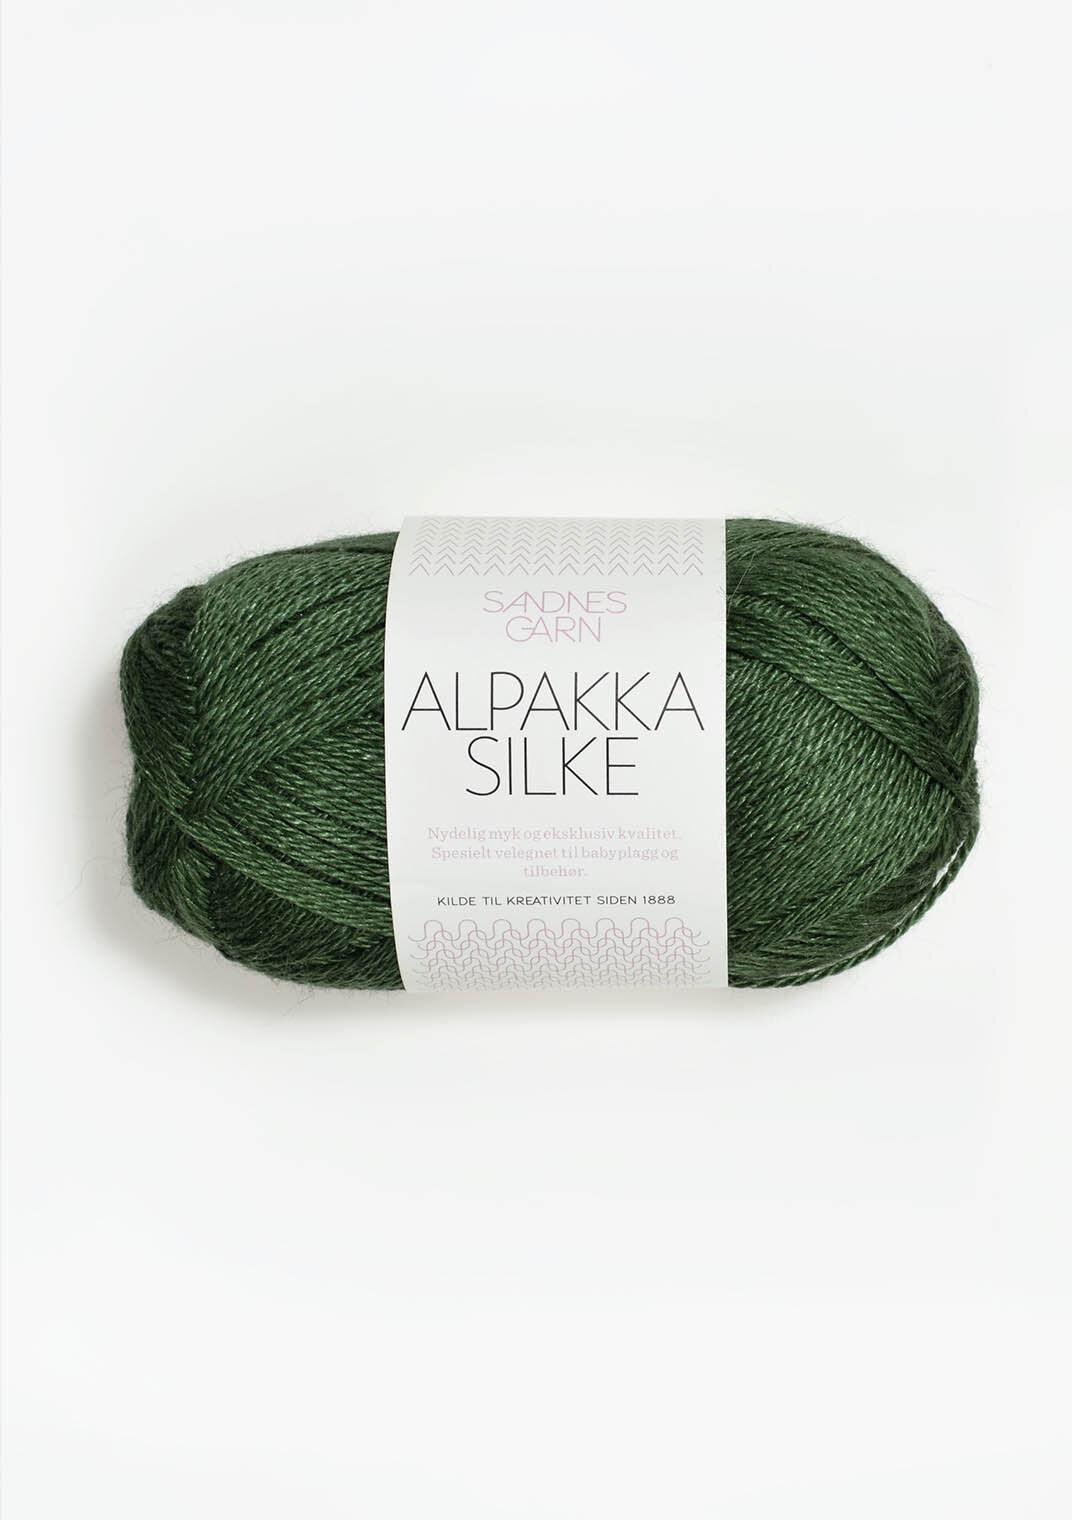 sandnes garn alpakka silke yarn 50g green 8264